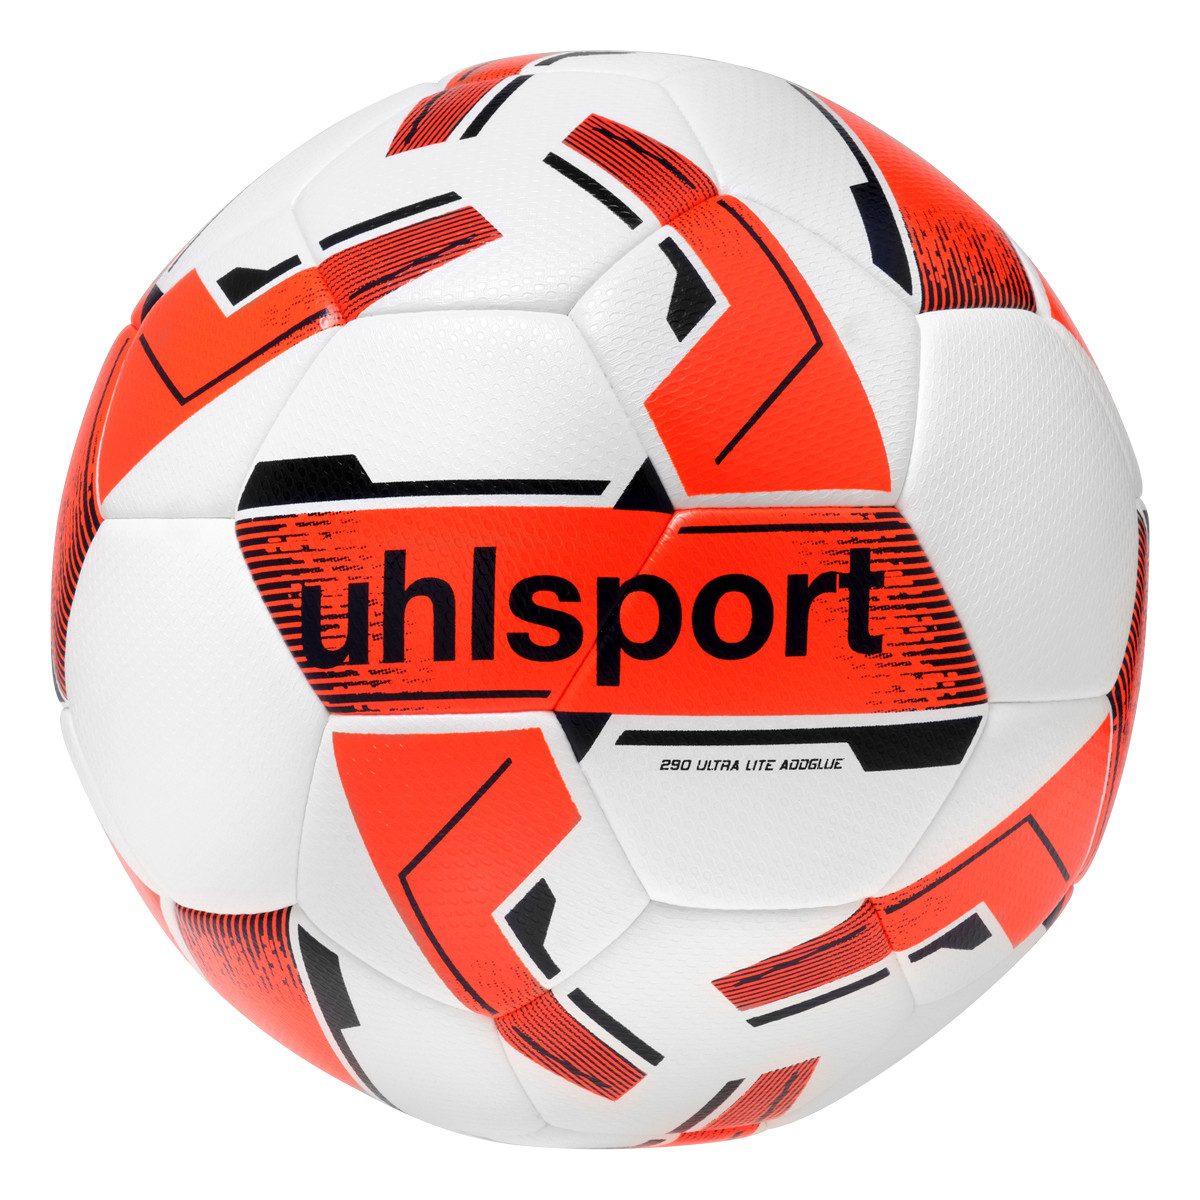 uhlsport Fußball Fußball 290 Ultra Lite Addglue